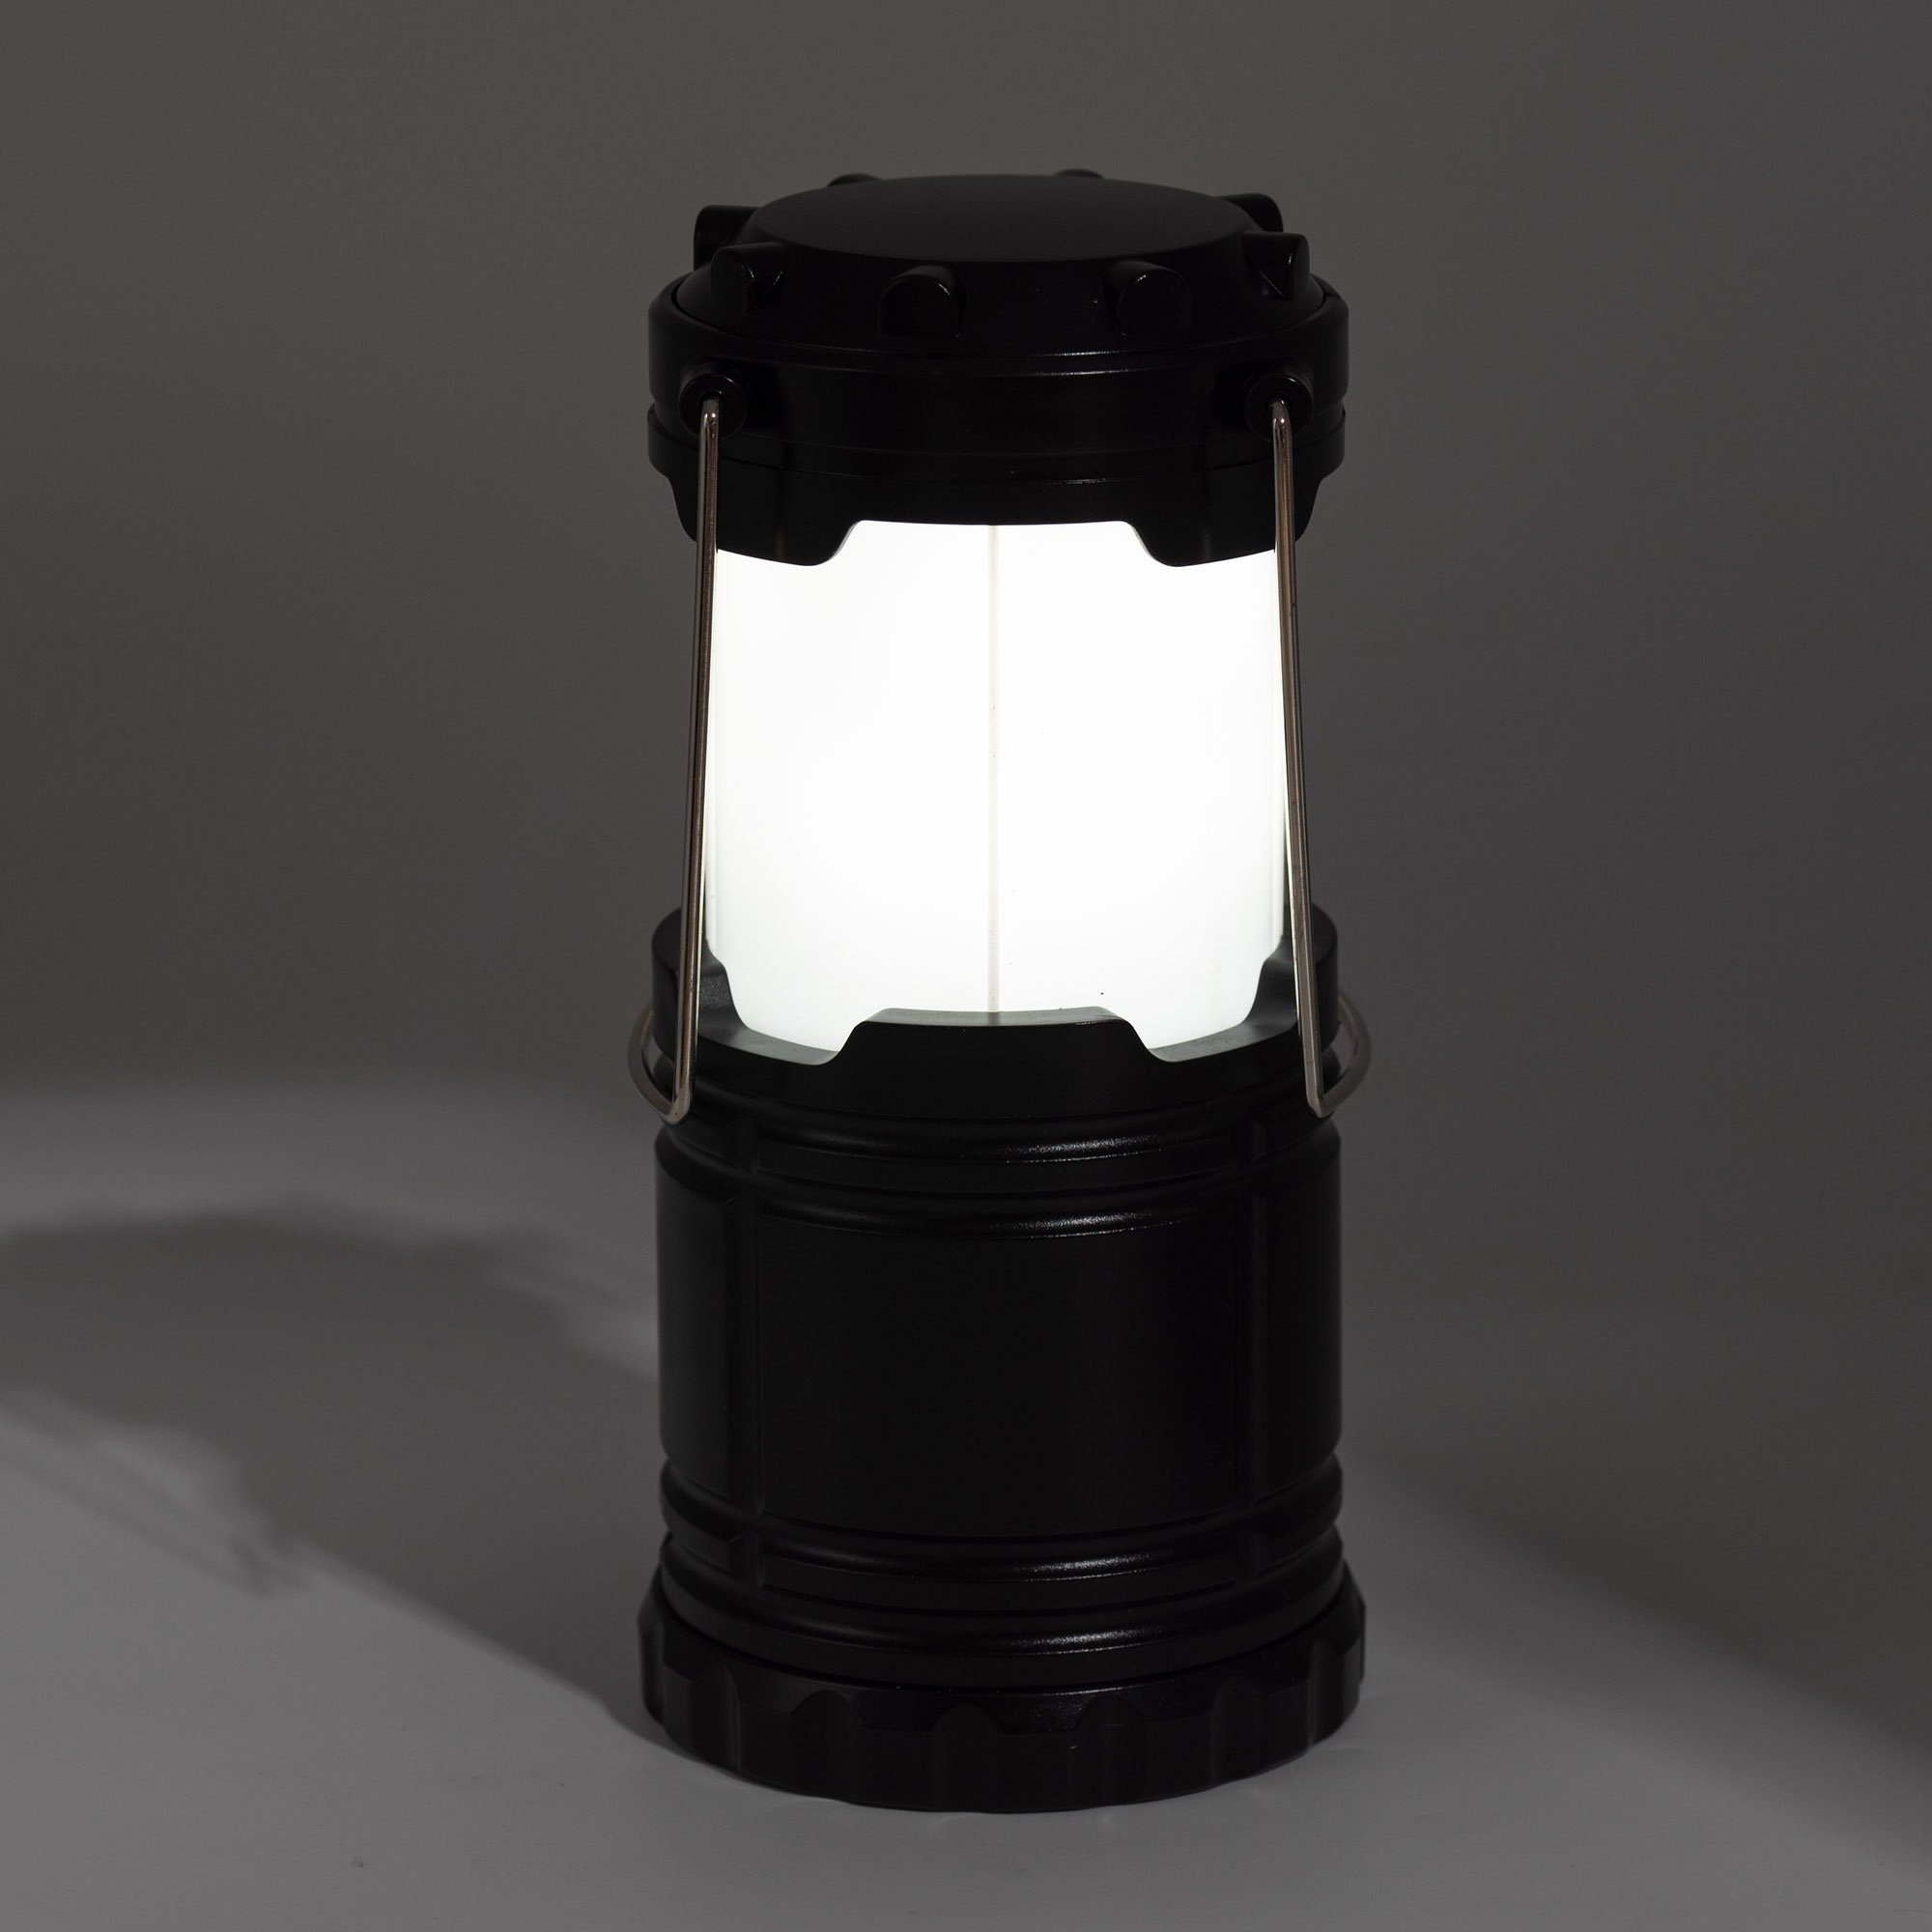 Lampe 2in1 Leuchte Zelt Laterne, Garten, Batterie, Taschenlampe Campinglampe BENSON Flammen, Effekt LED